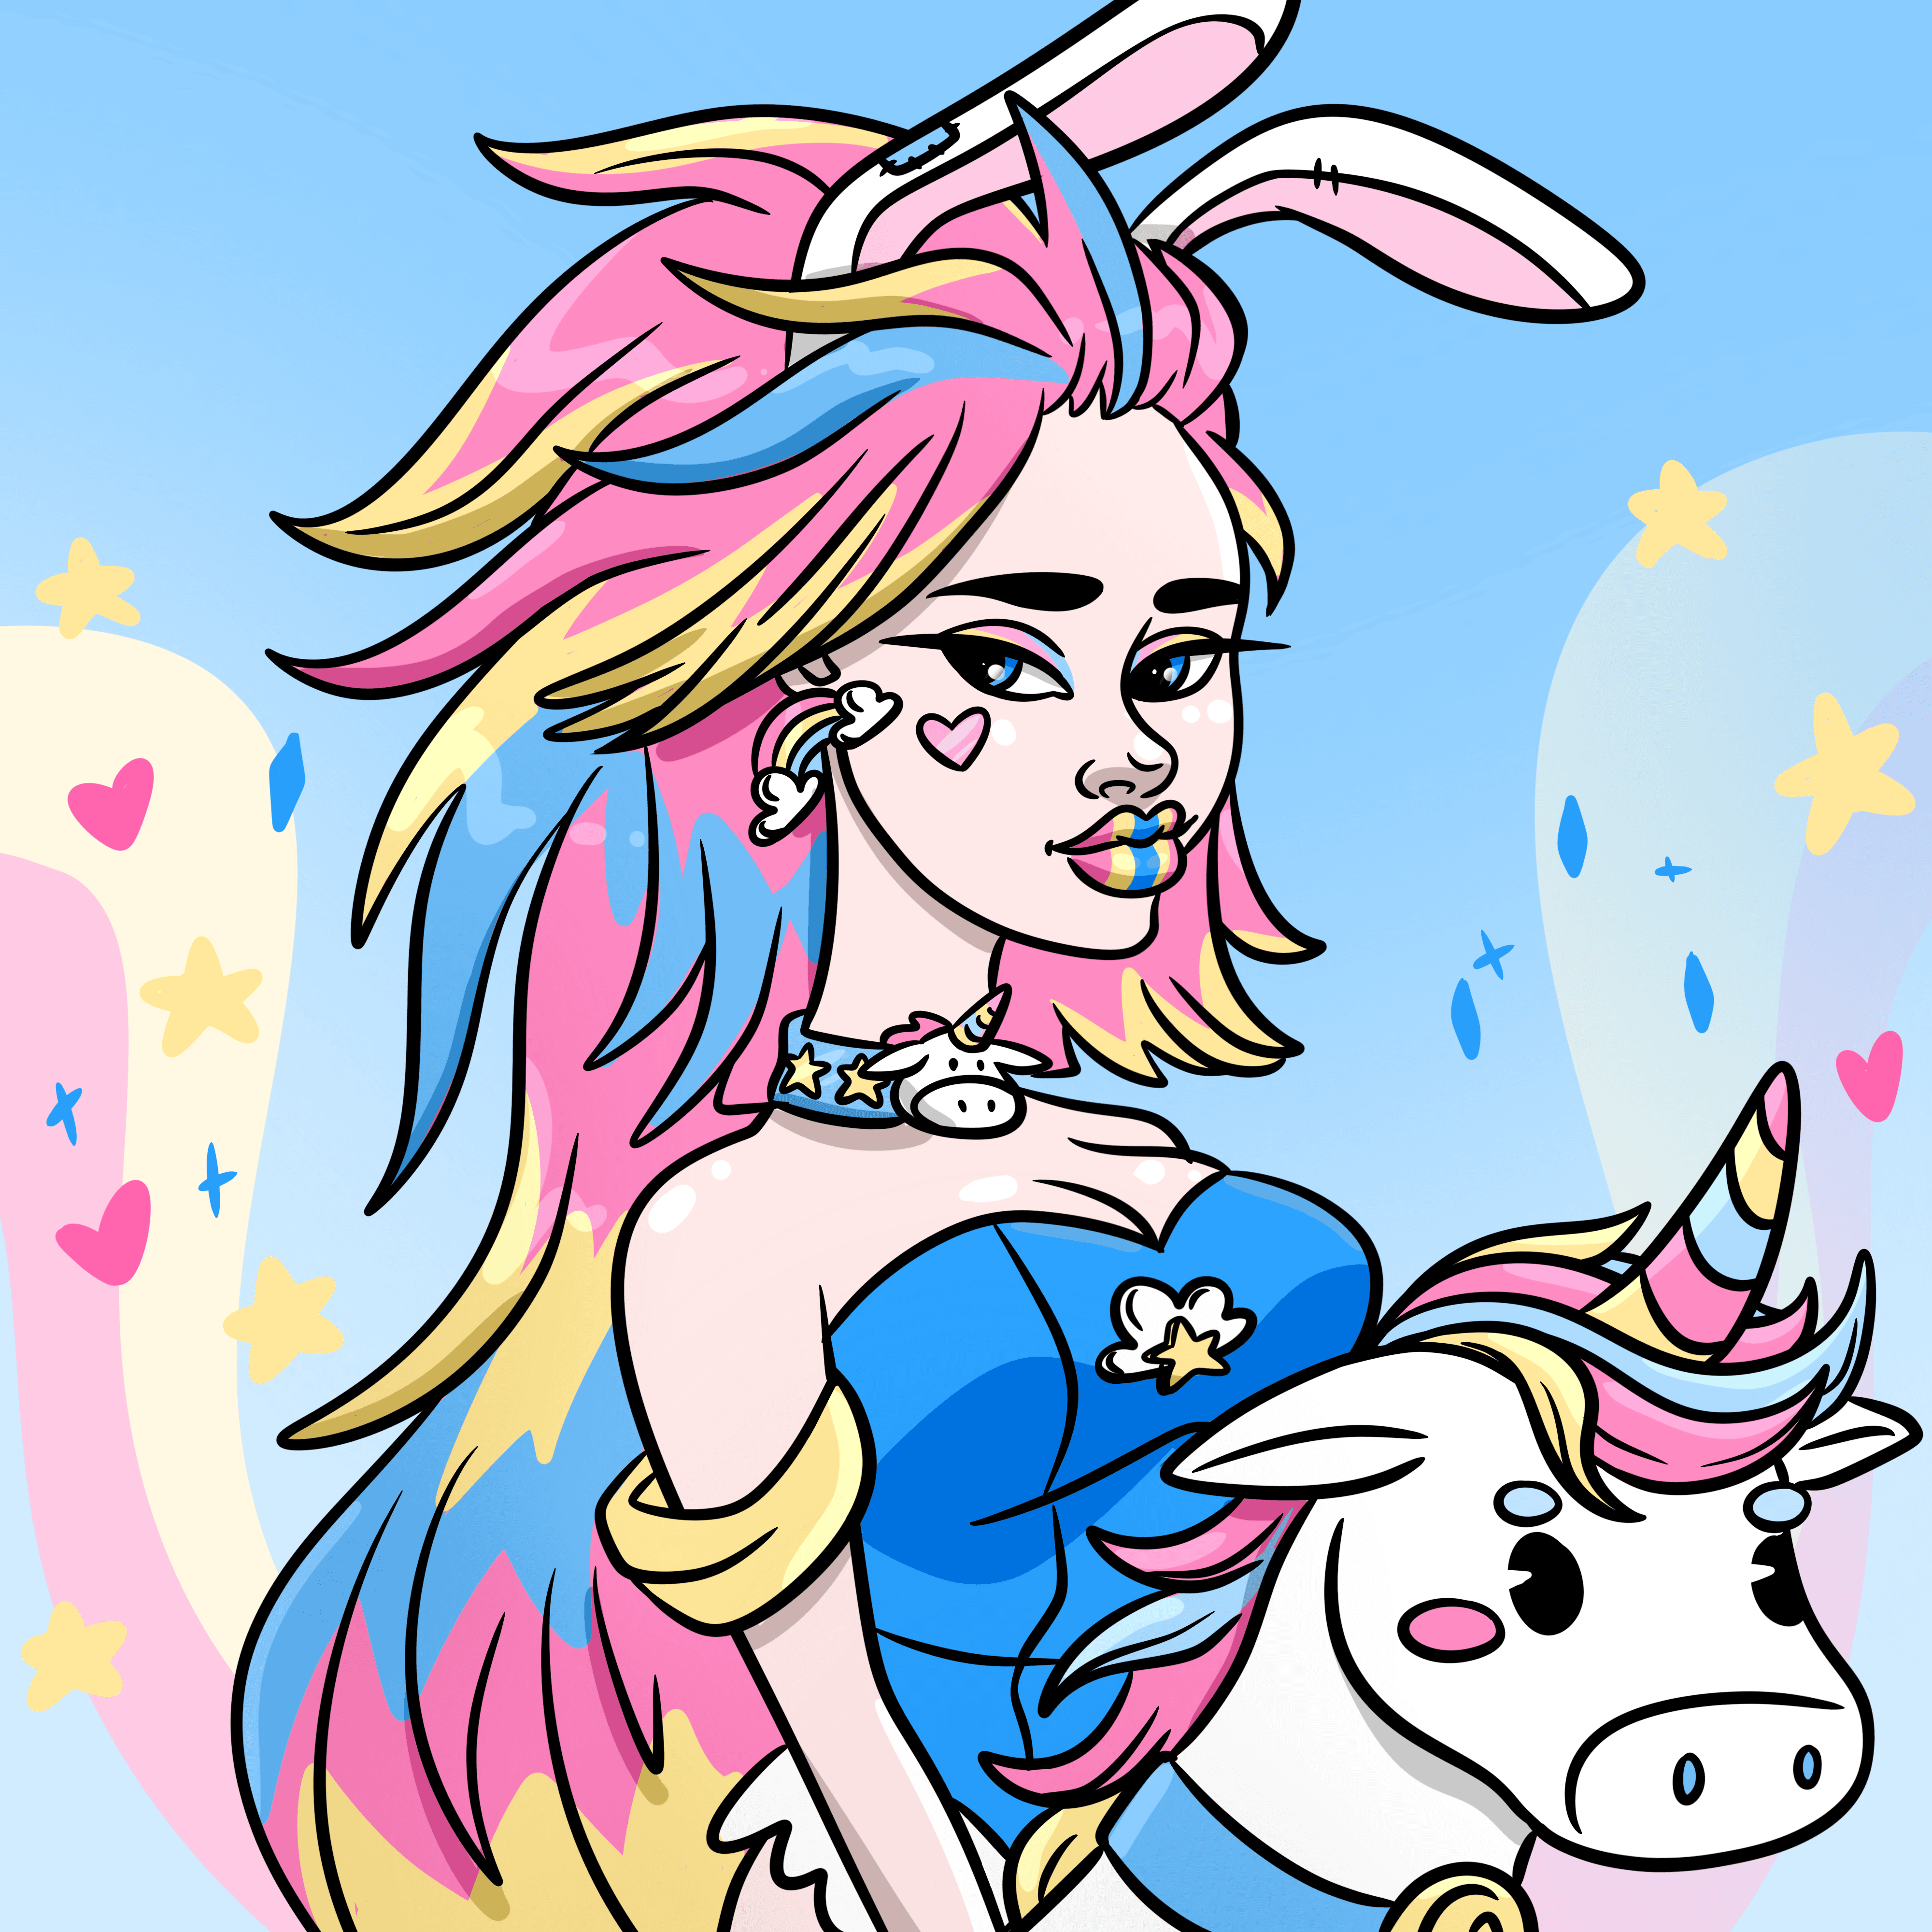 Mika and the Birthday Unicorn